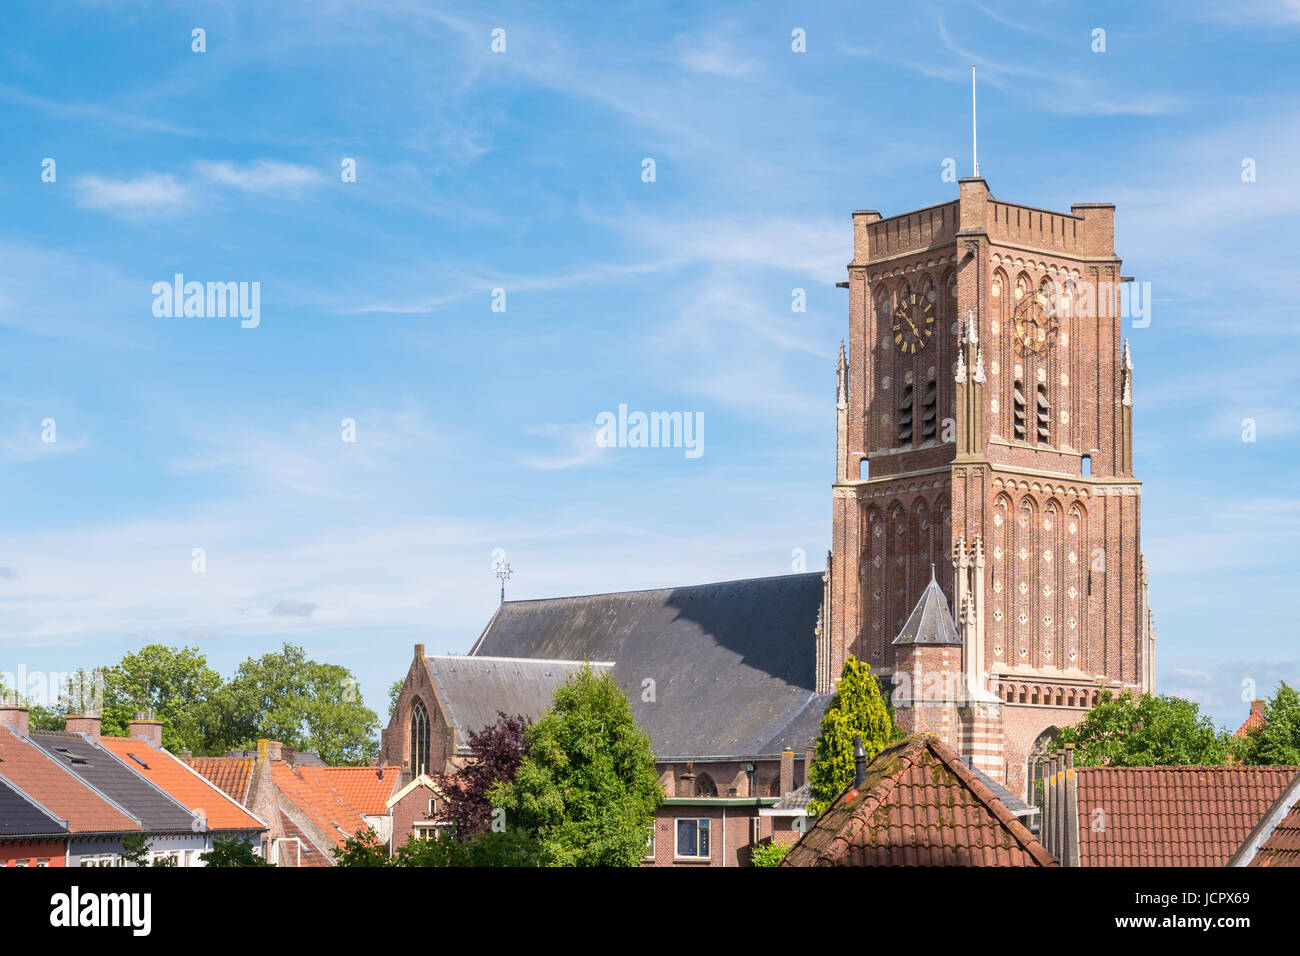 Plaza de la torre de la iglesia de Saint Martin Mosterdpot's Church en la antigua ciudad fortificada de Woudrichem, Brabant, Holanda Foto de stock